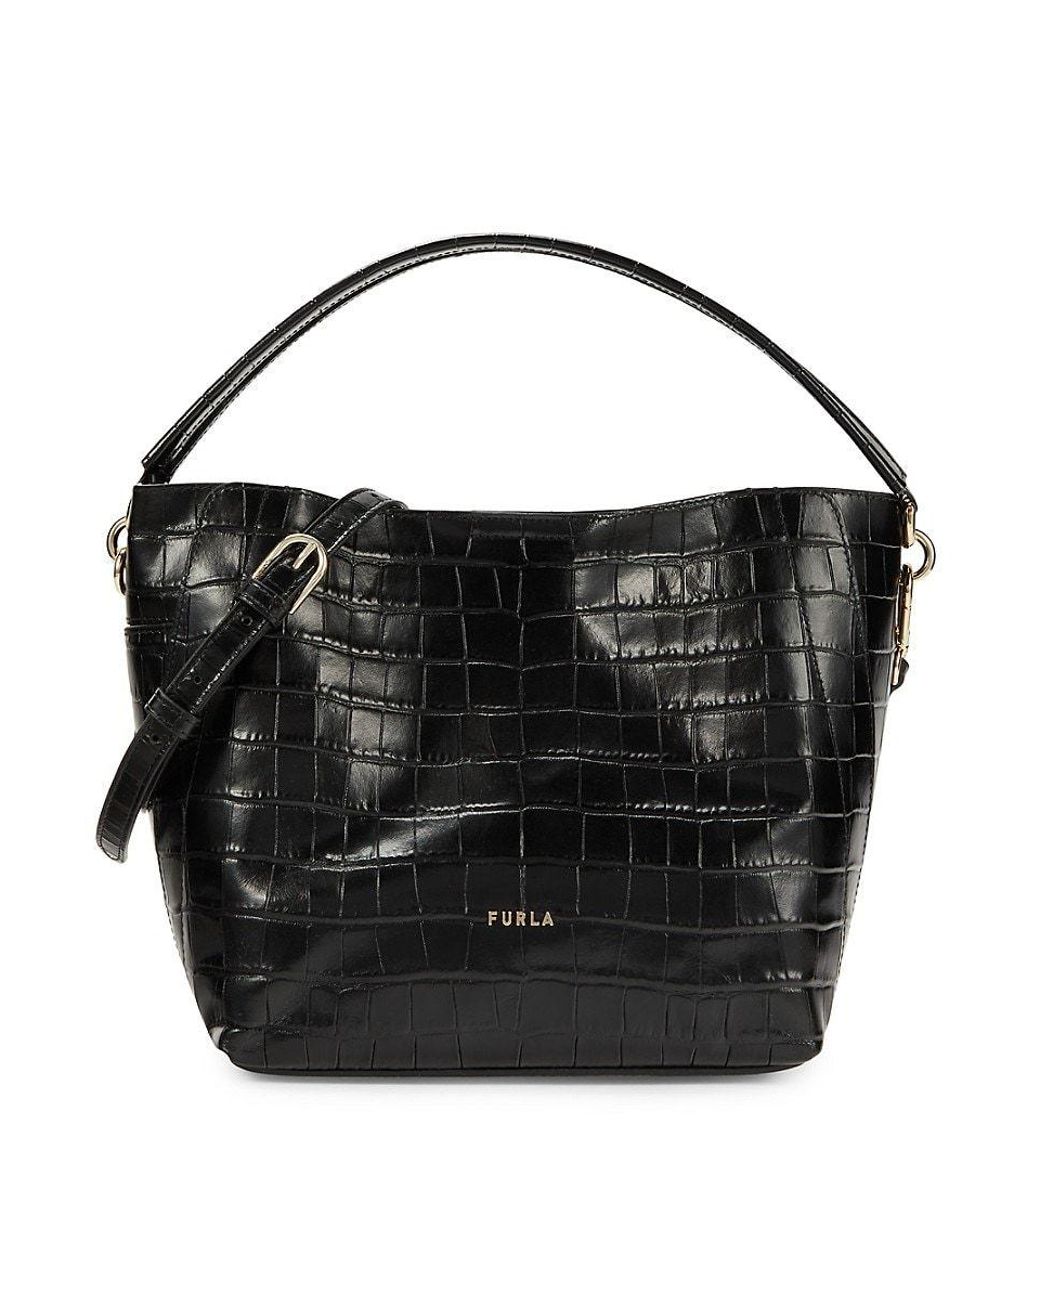 FURLA FURLA GRACE M HOBO W/ZIP, Women's Handbag